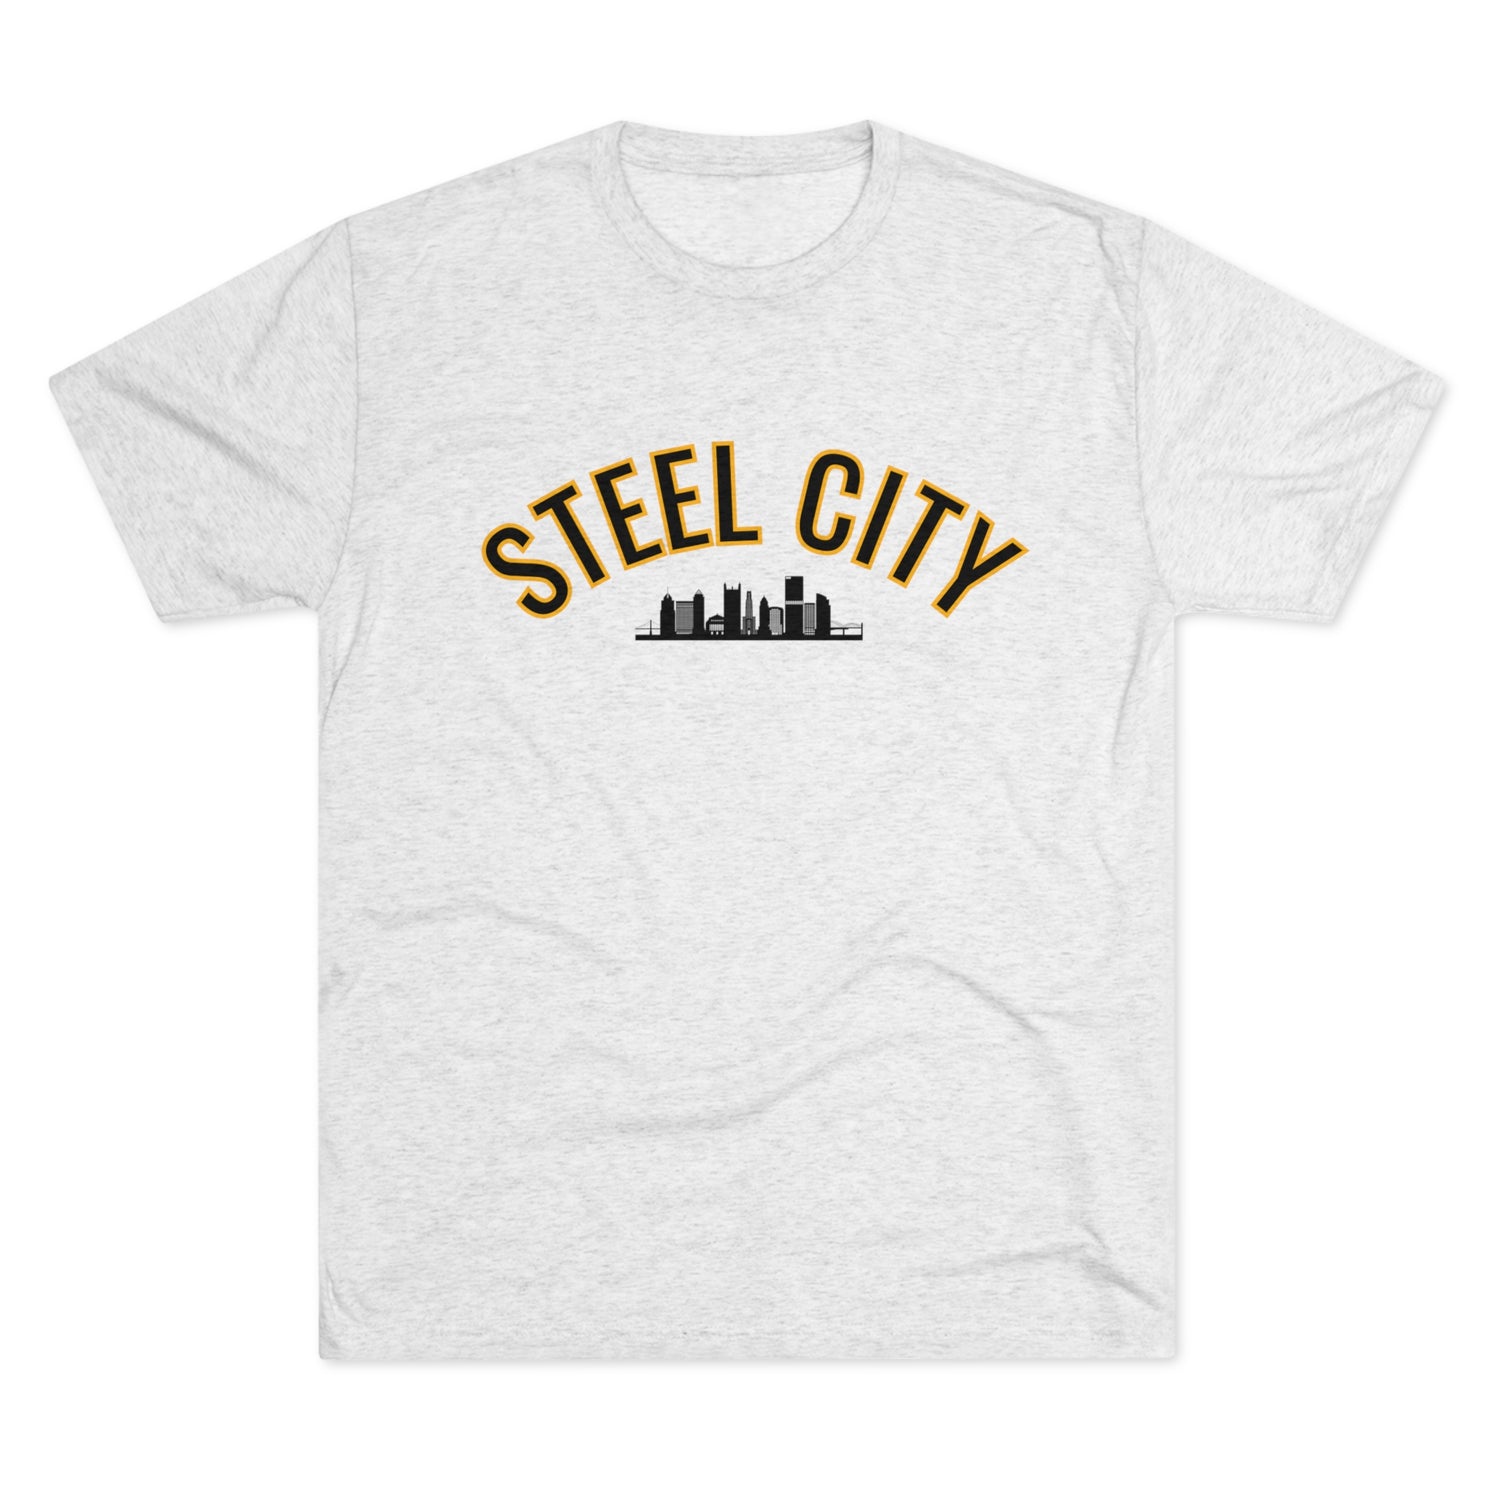 Steel City Tee